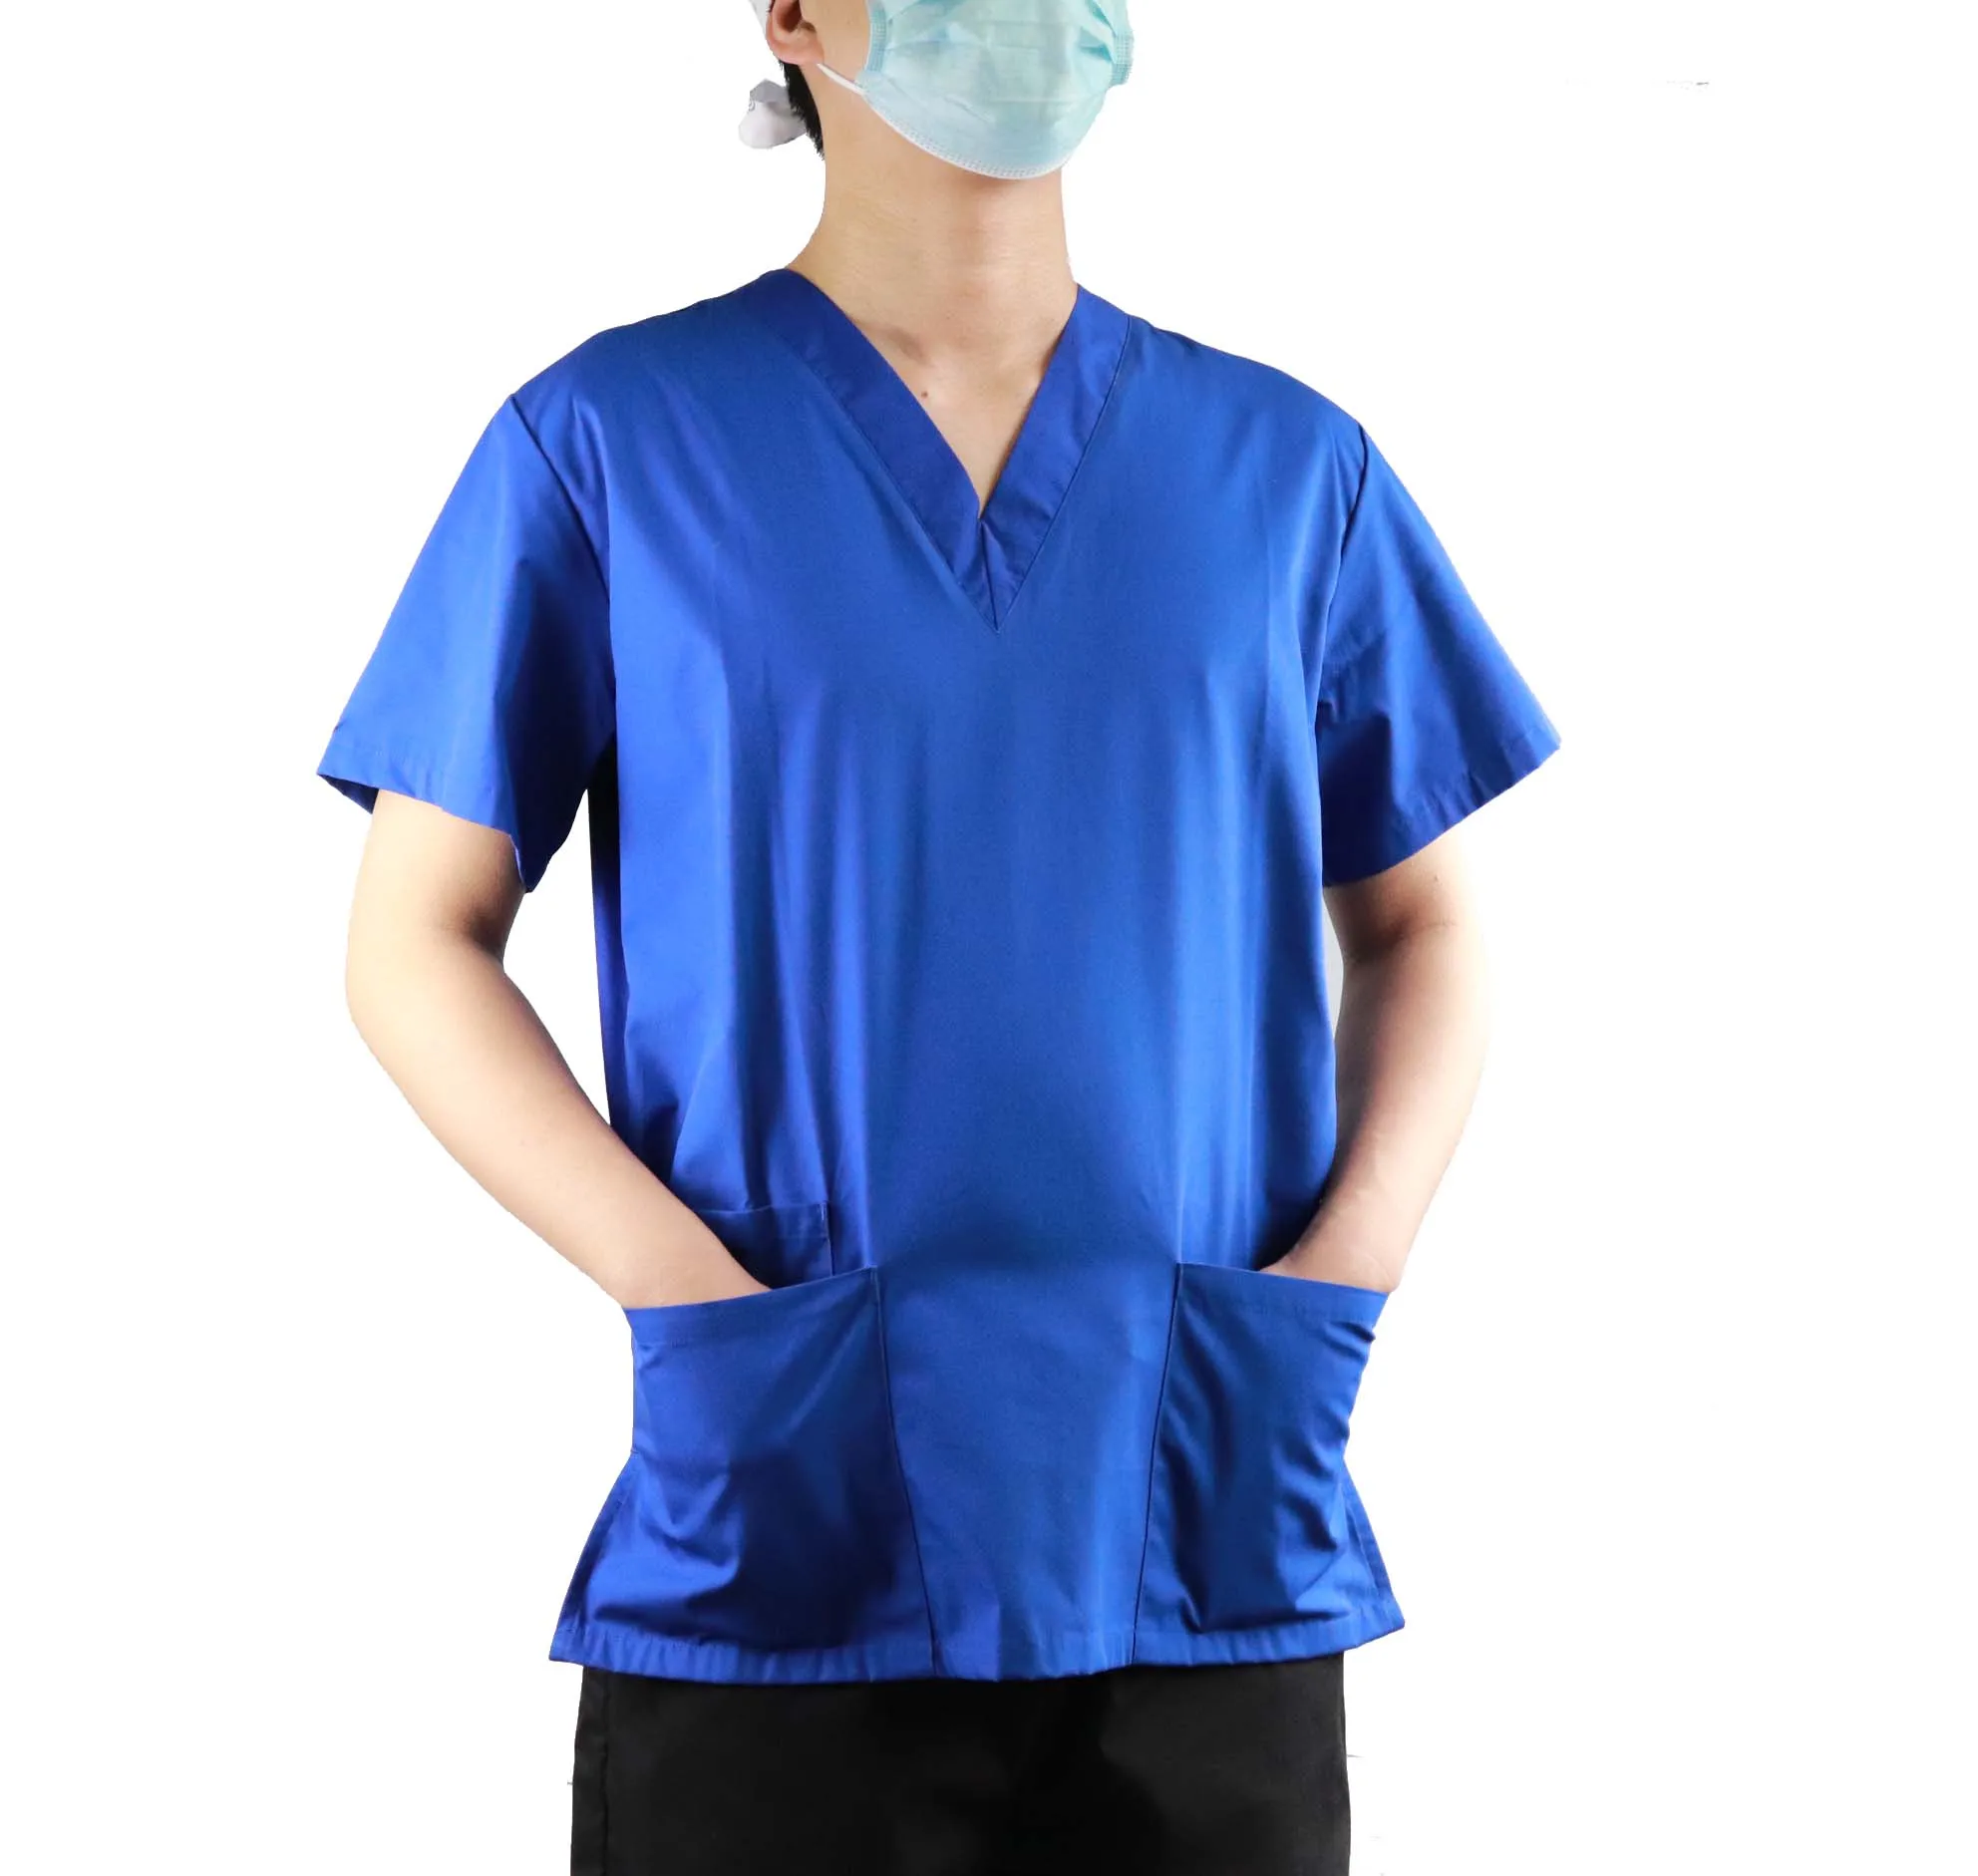 Women's Medical Nursing Uniform Solid Printed Fashion Scrubs Top Hospital Clinic